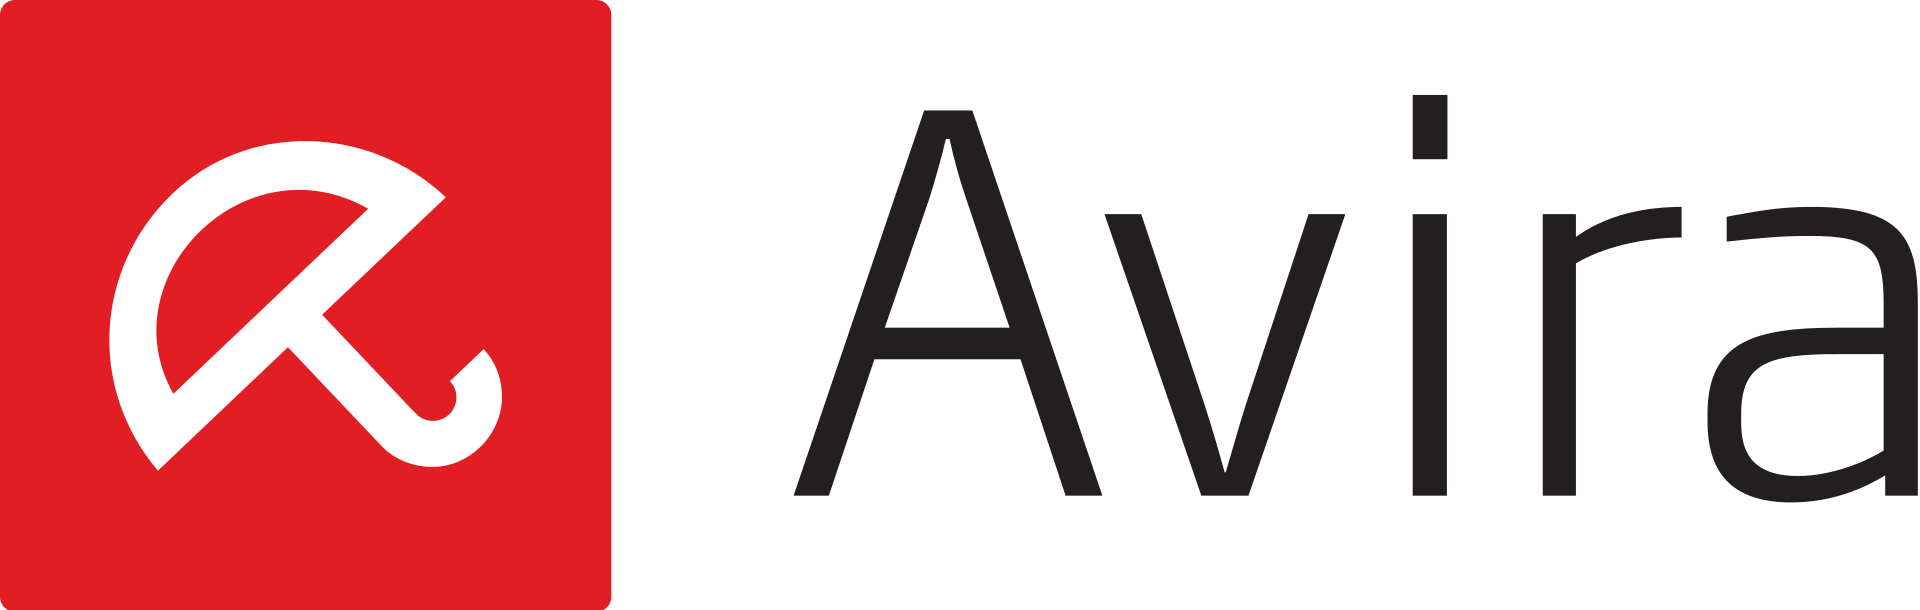 Gen Digital - Avira - Avira Operations GmbH & Co. KG